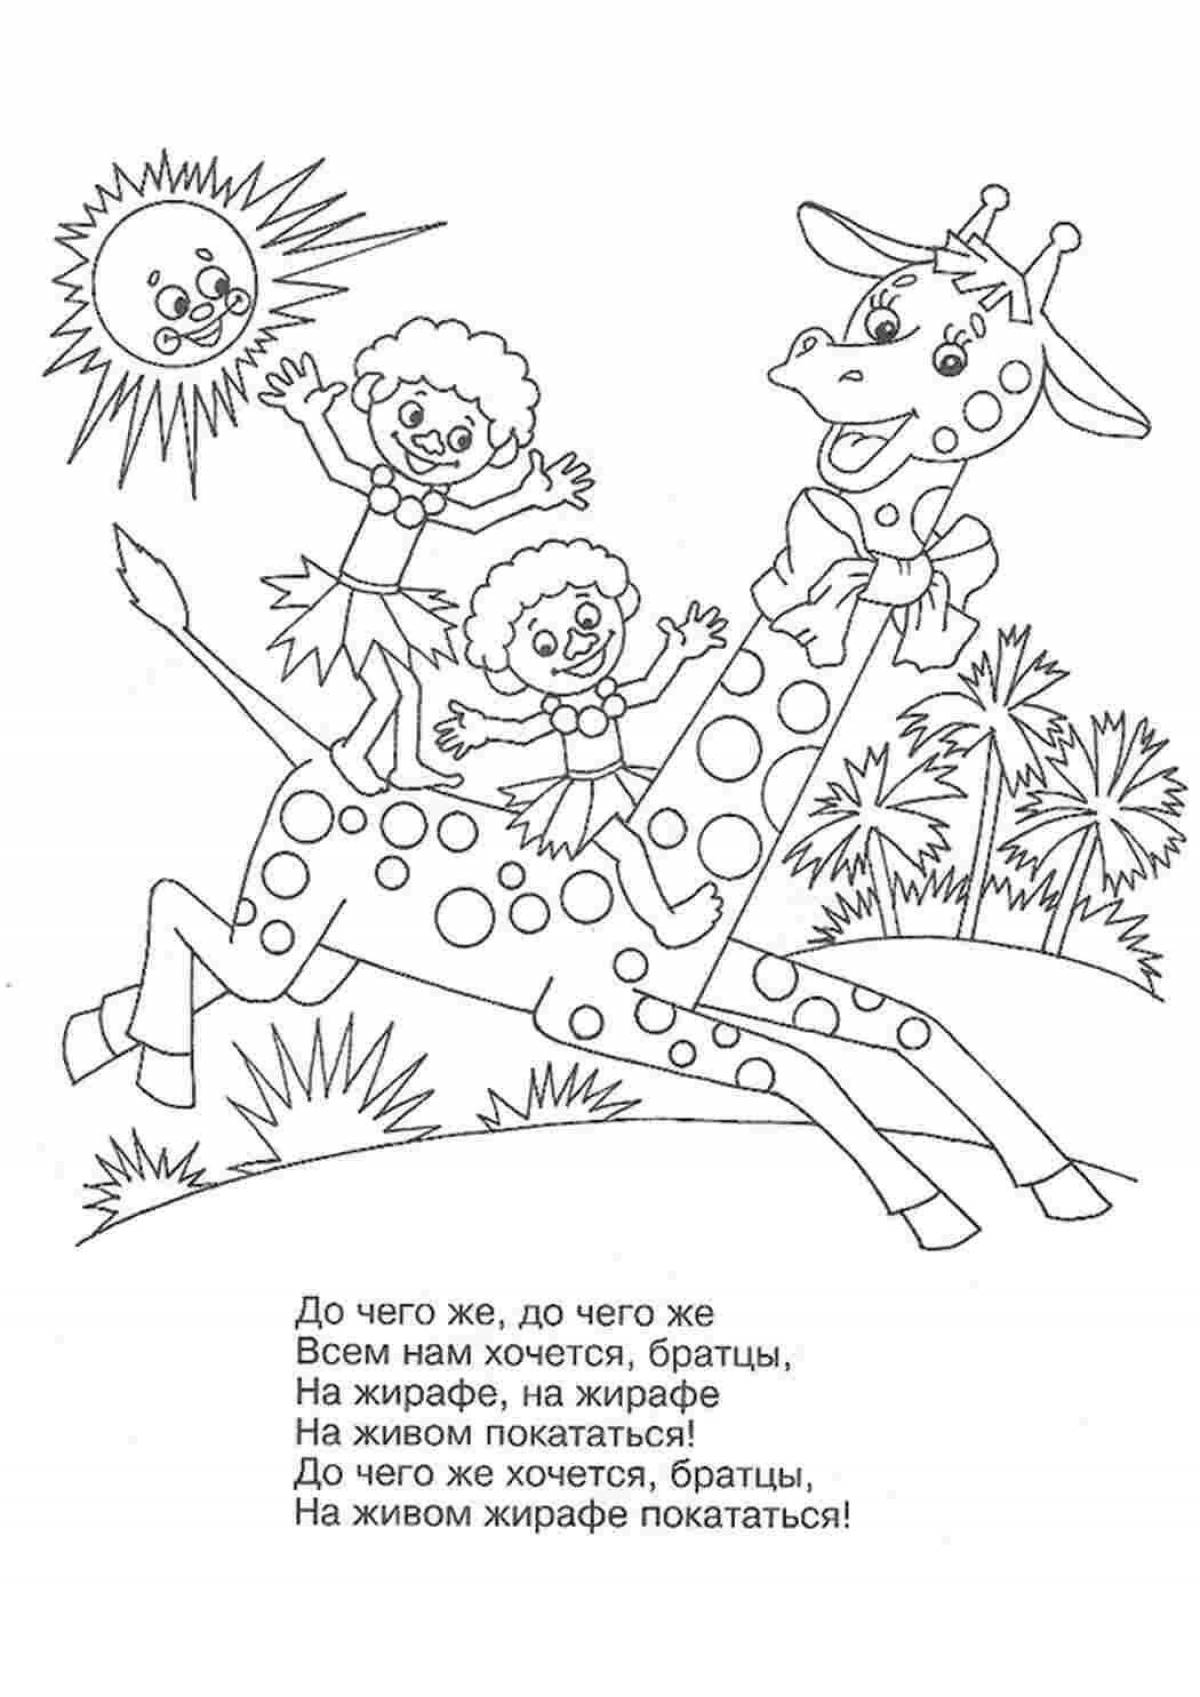 Bright crumbs antoshka coloring book